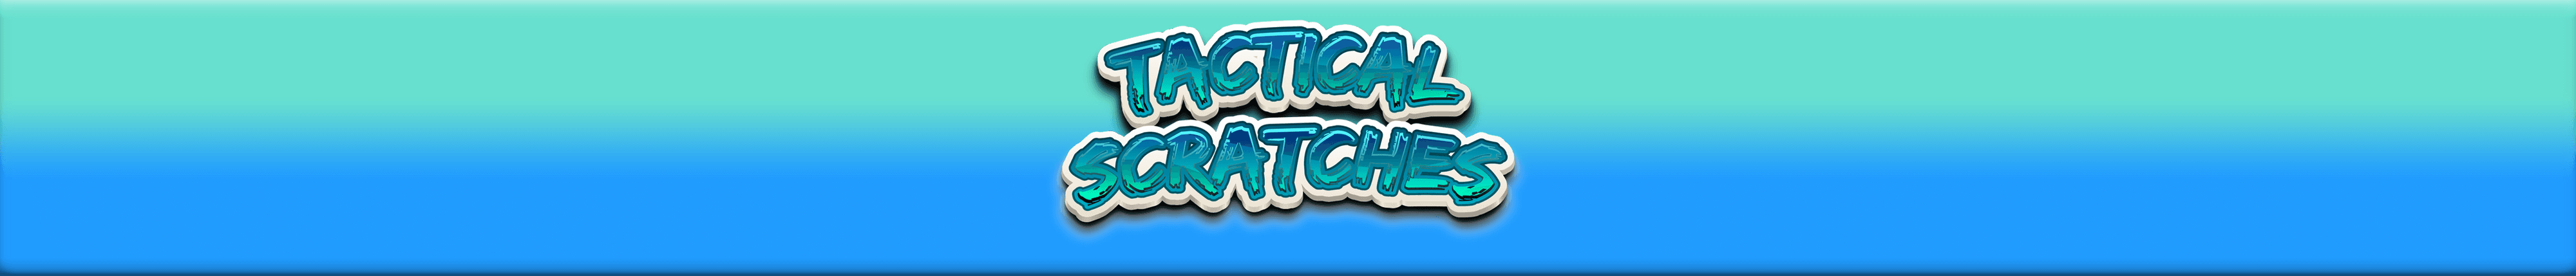 TacticalScratches banner